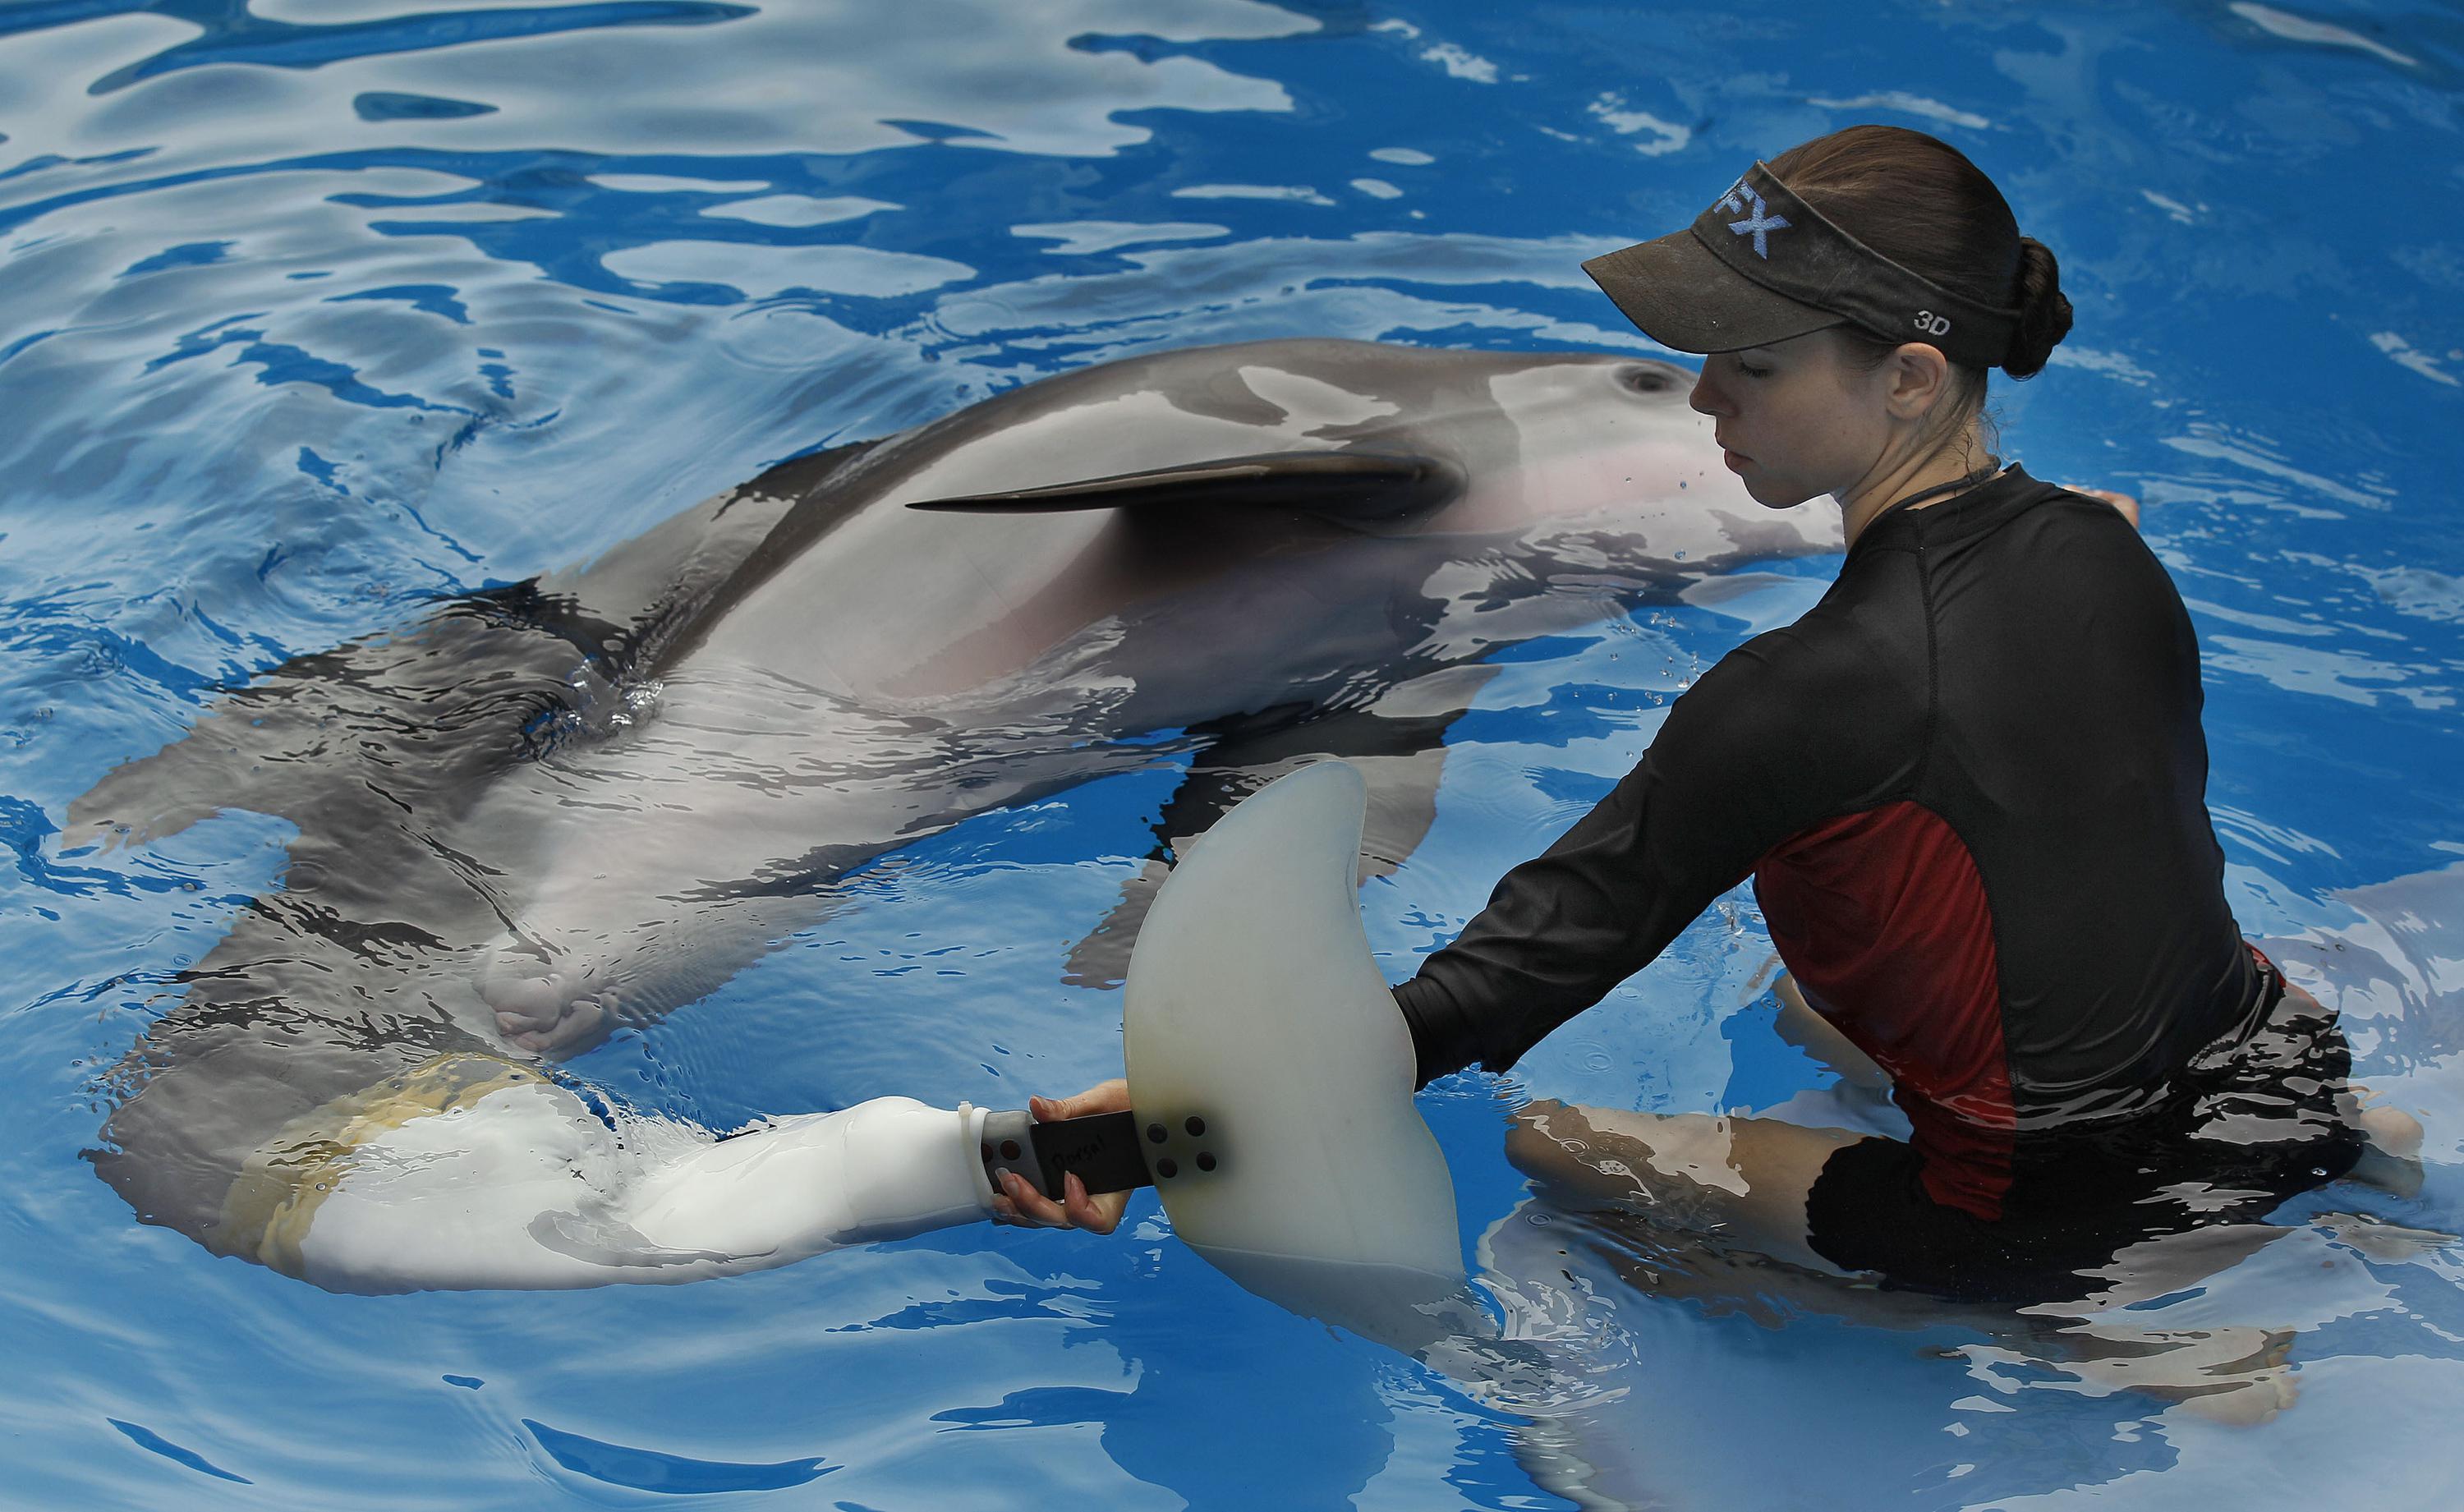 Florida aquarium creates legacy for famed Winter the Dolphin